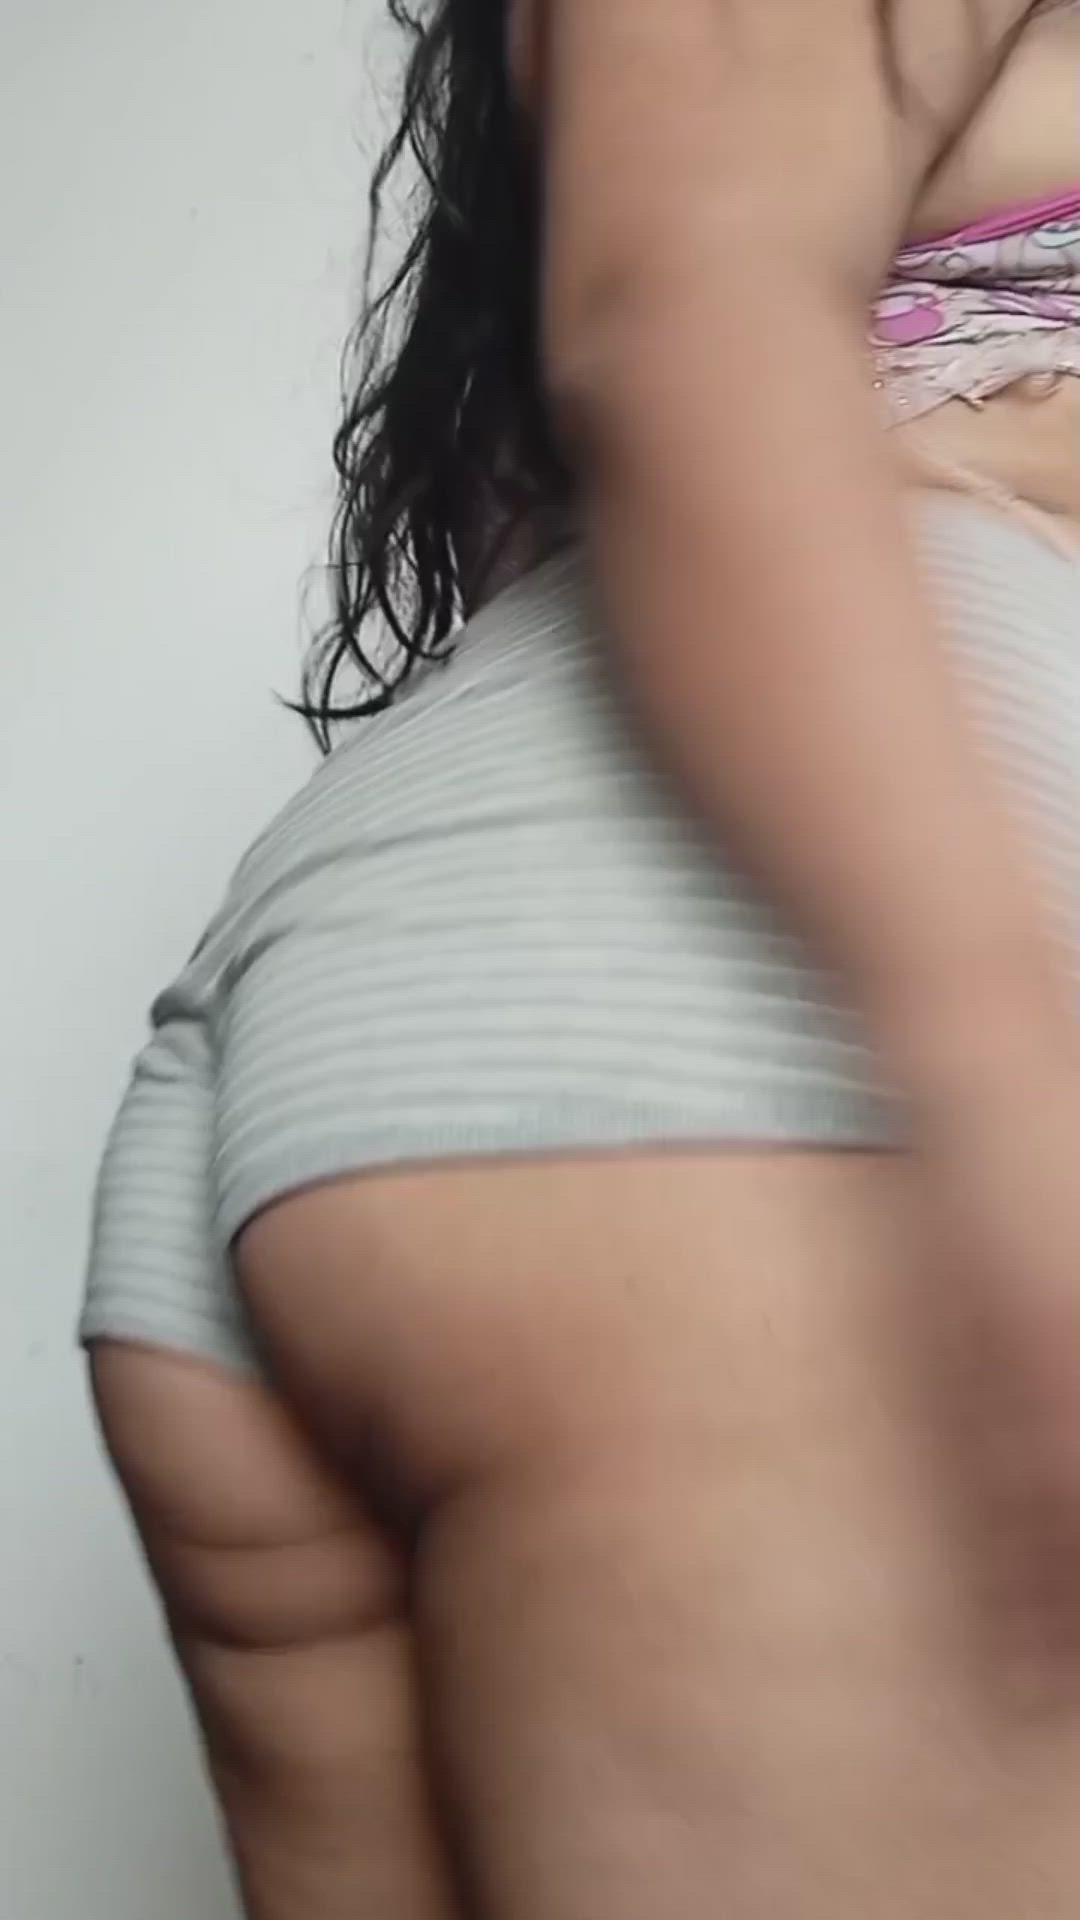 Sports Bra porn video with onlyfans model brunelust <strong>@brunelust</strong>